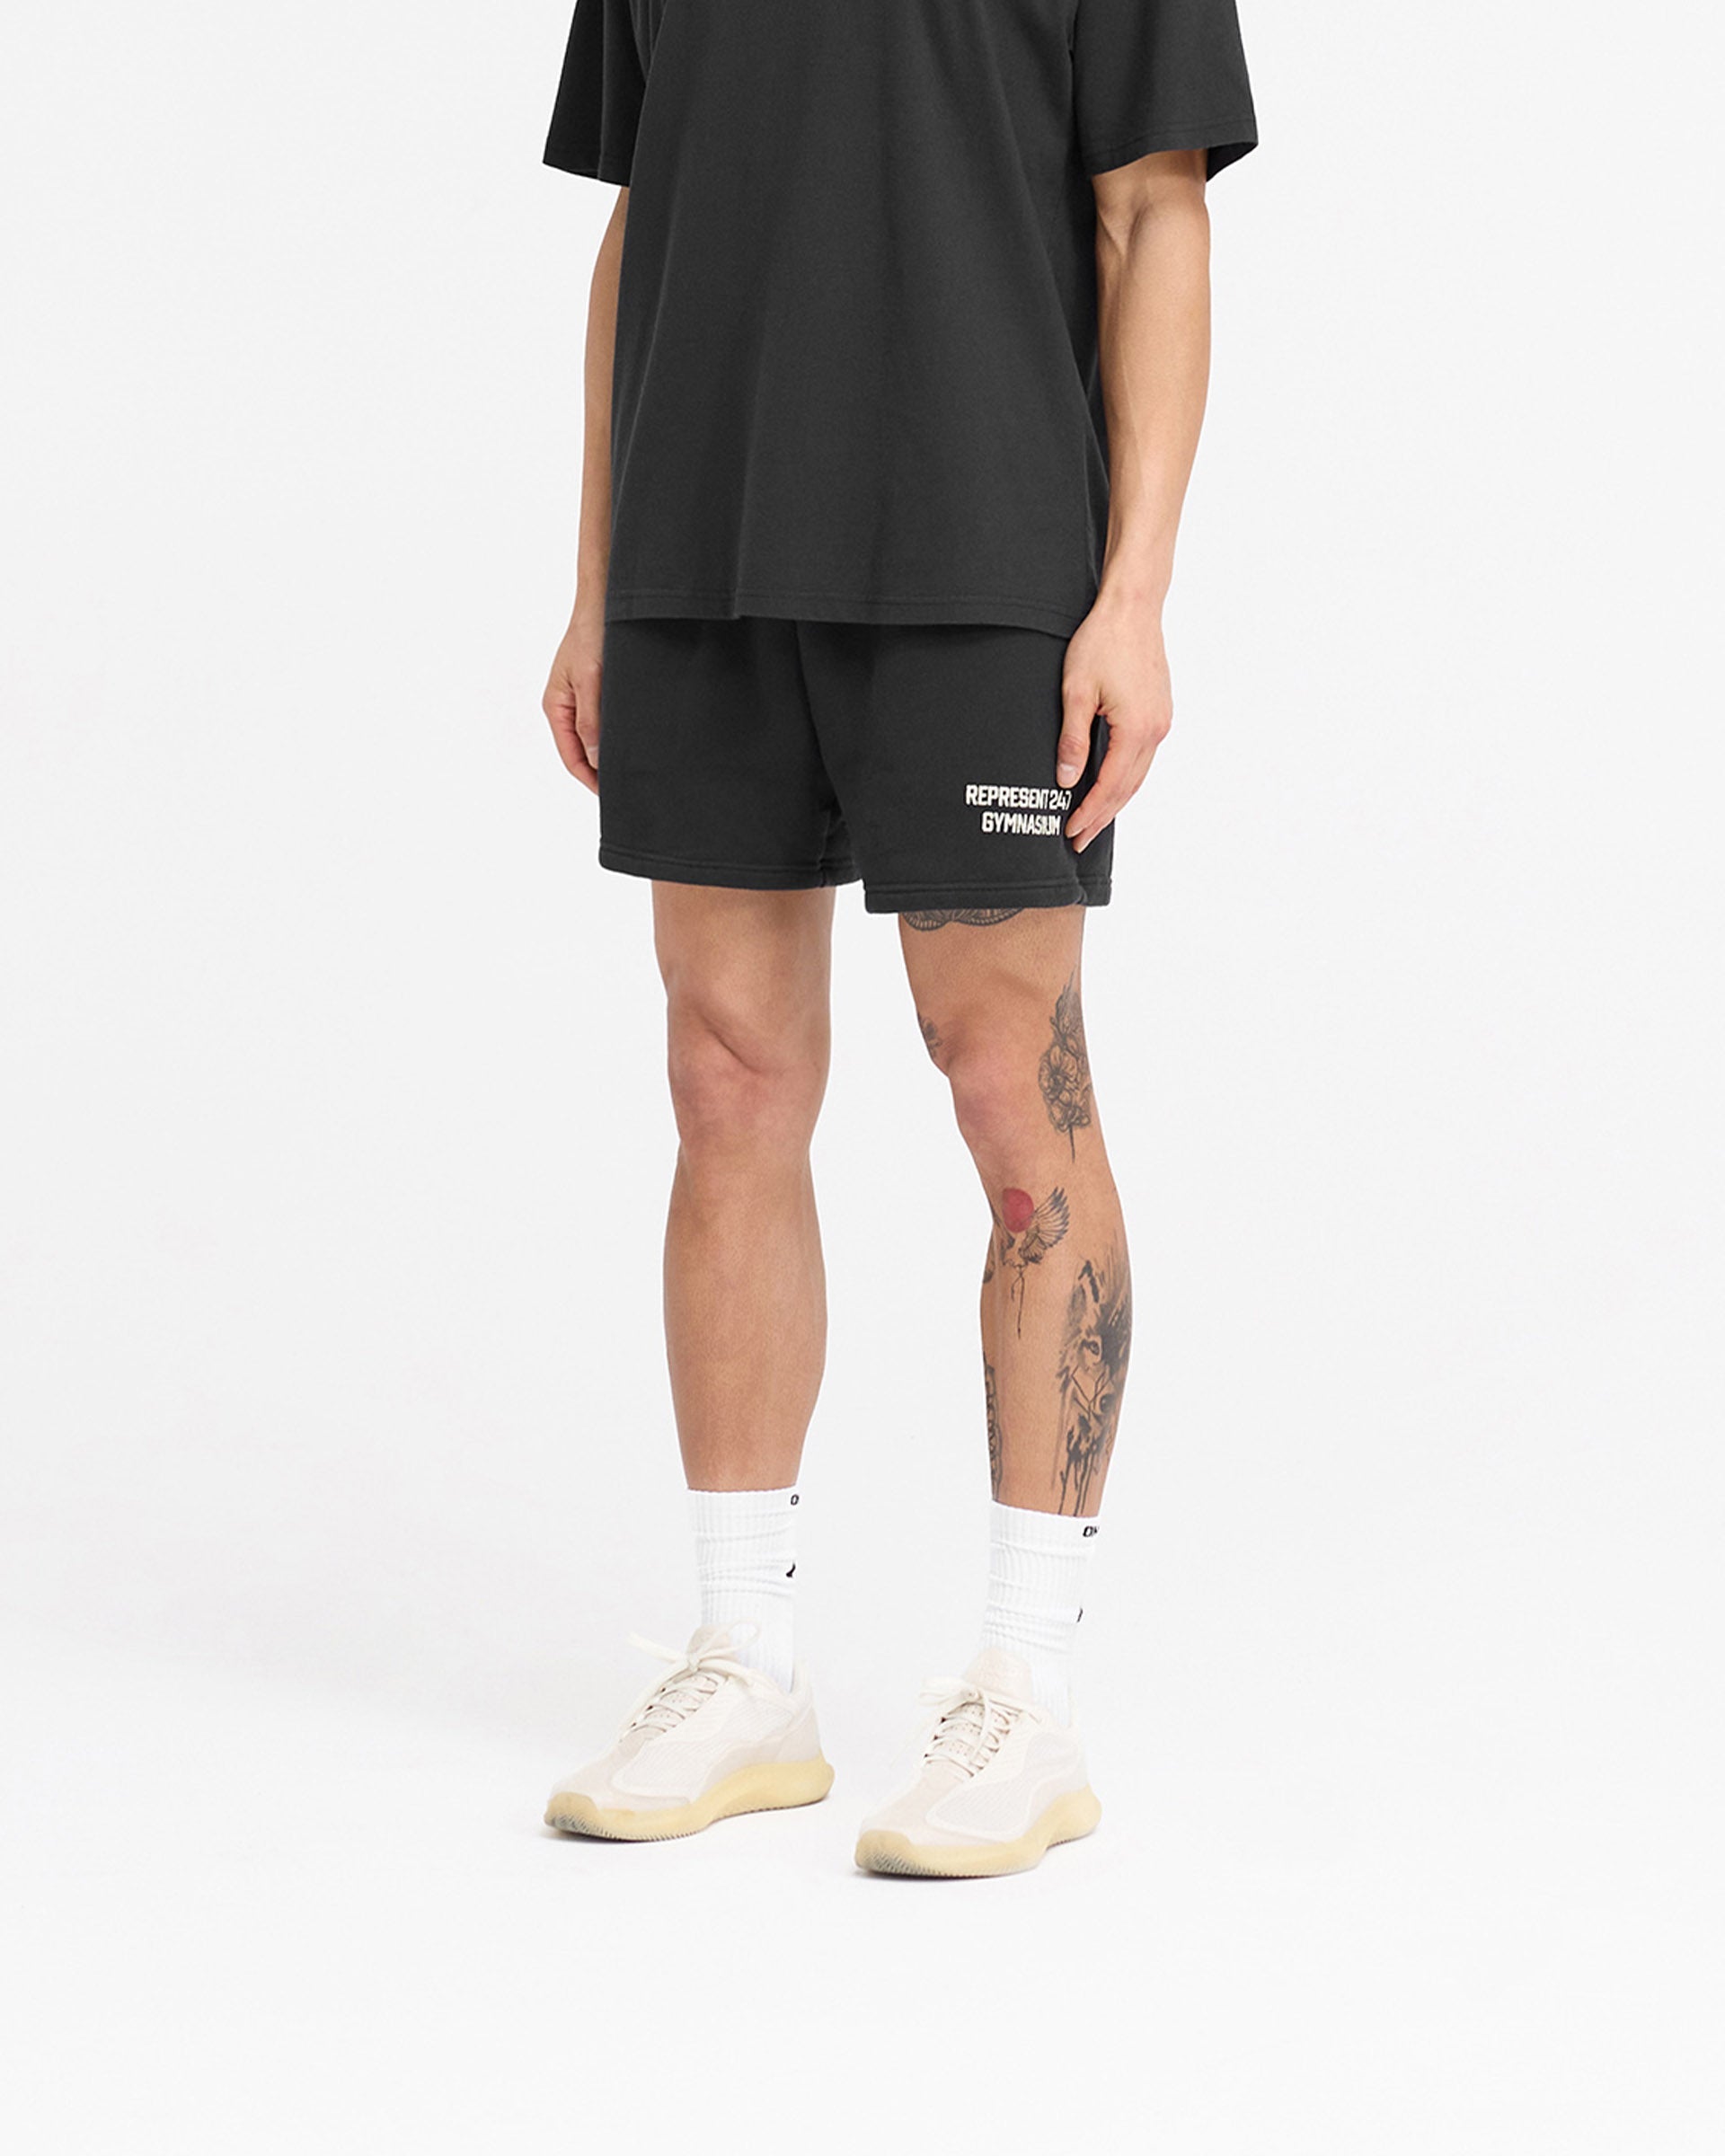 247 Gymnasium Jersey Shorts - Off Black